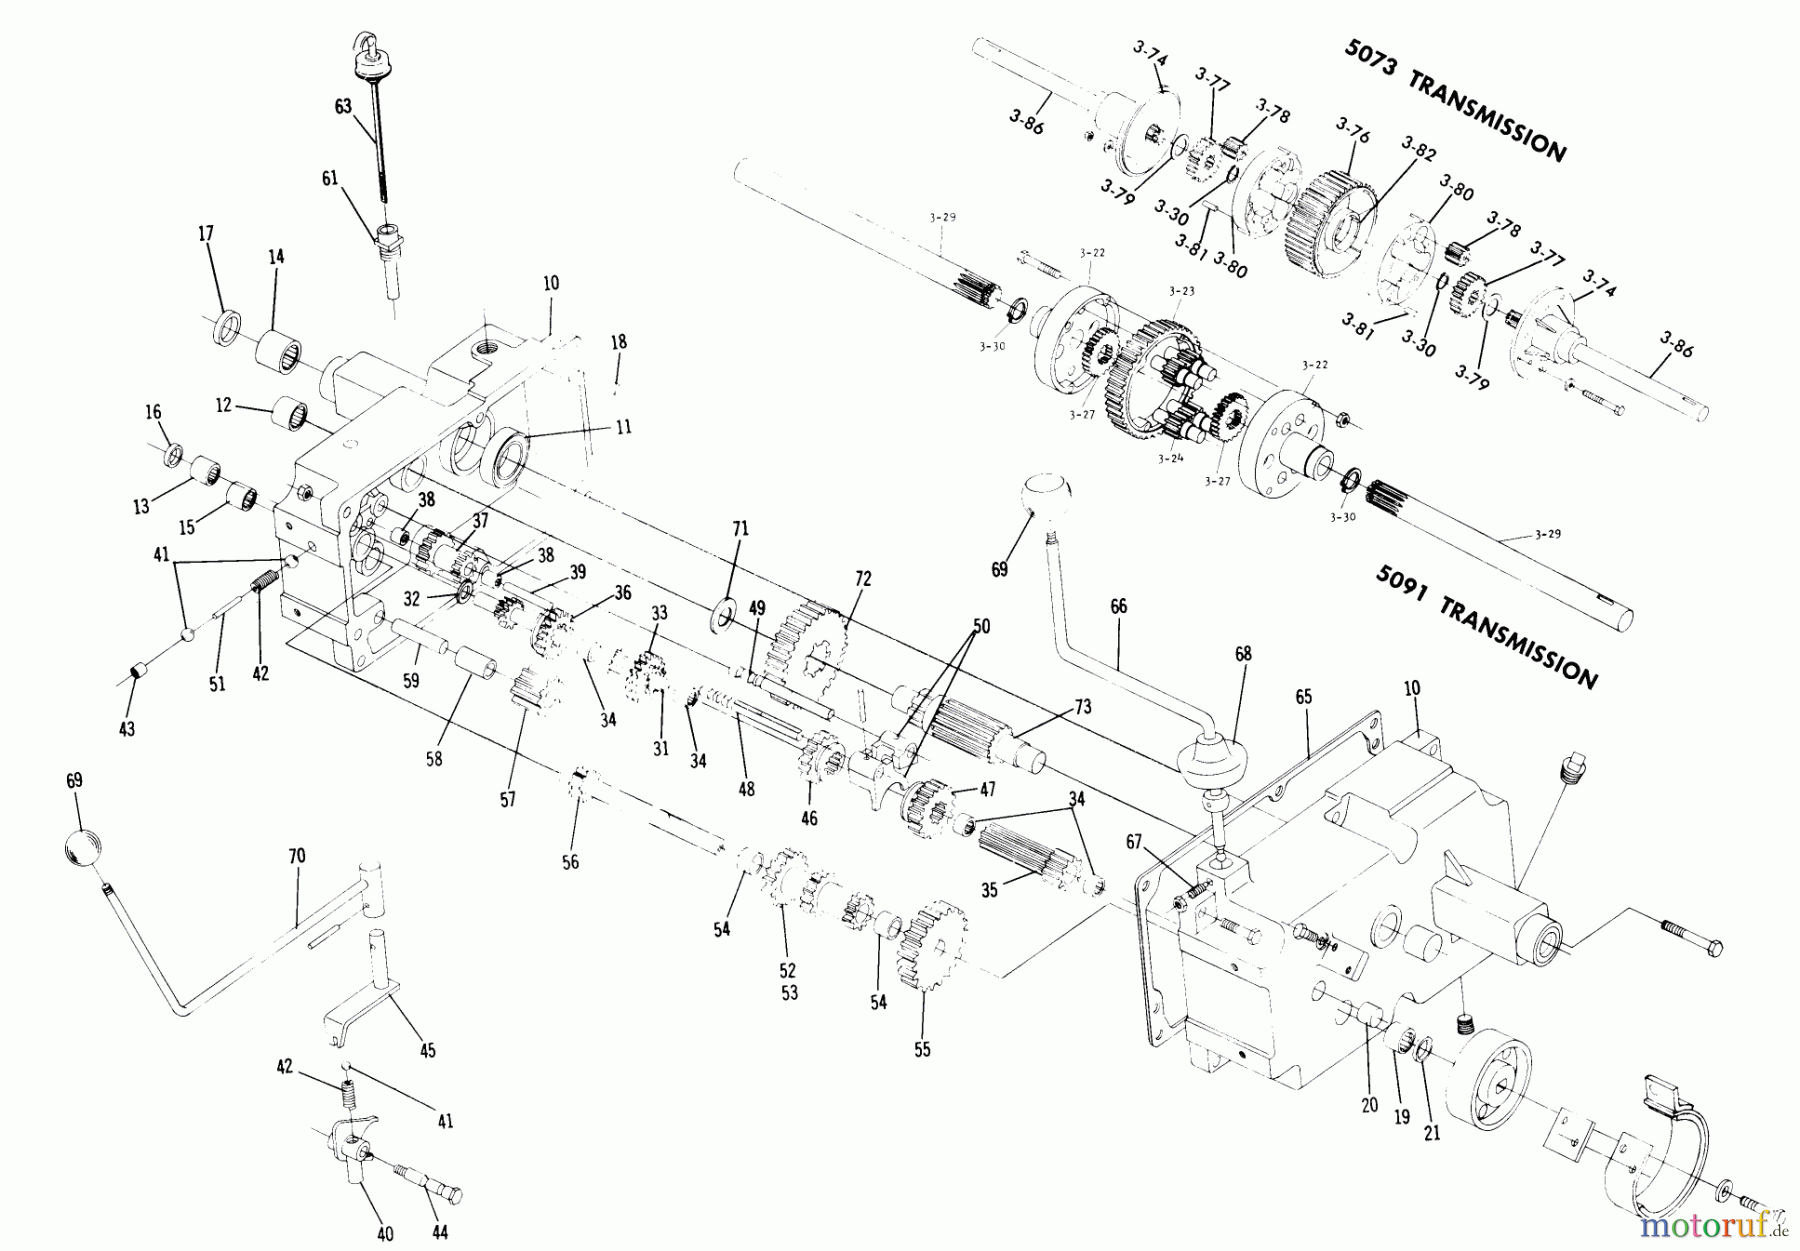  Toro Neu Mowers, Lawn & Garden Tractor Seite 1 1-0385 (C-160) - Toro C-160 8-Speed Tractor, 1974 TRANSMISSION 8-SPEED